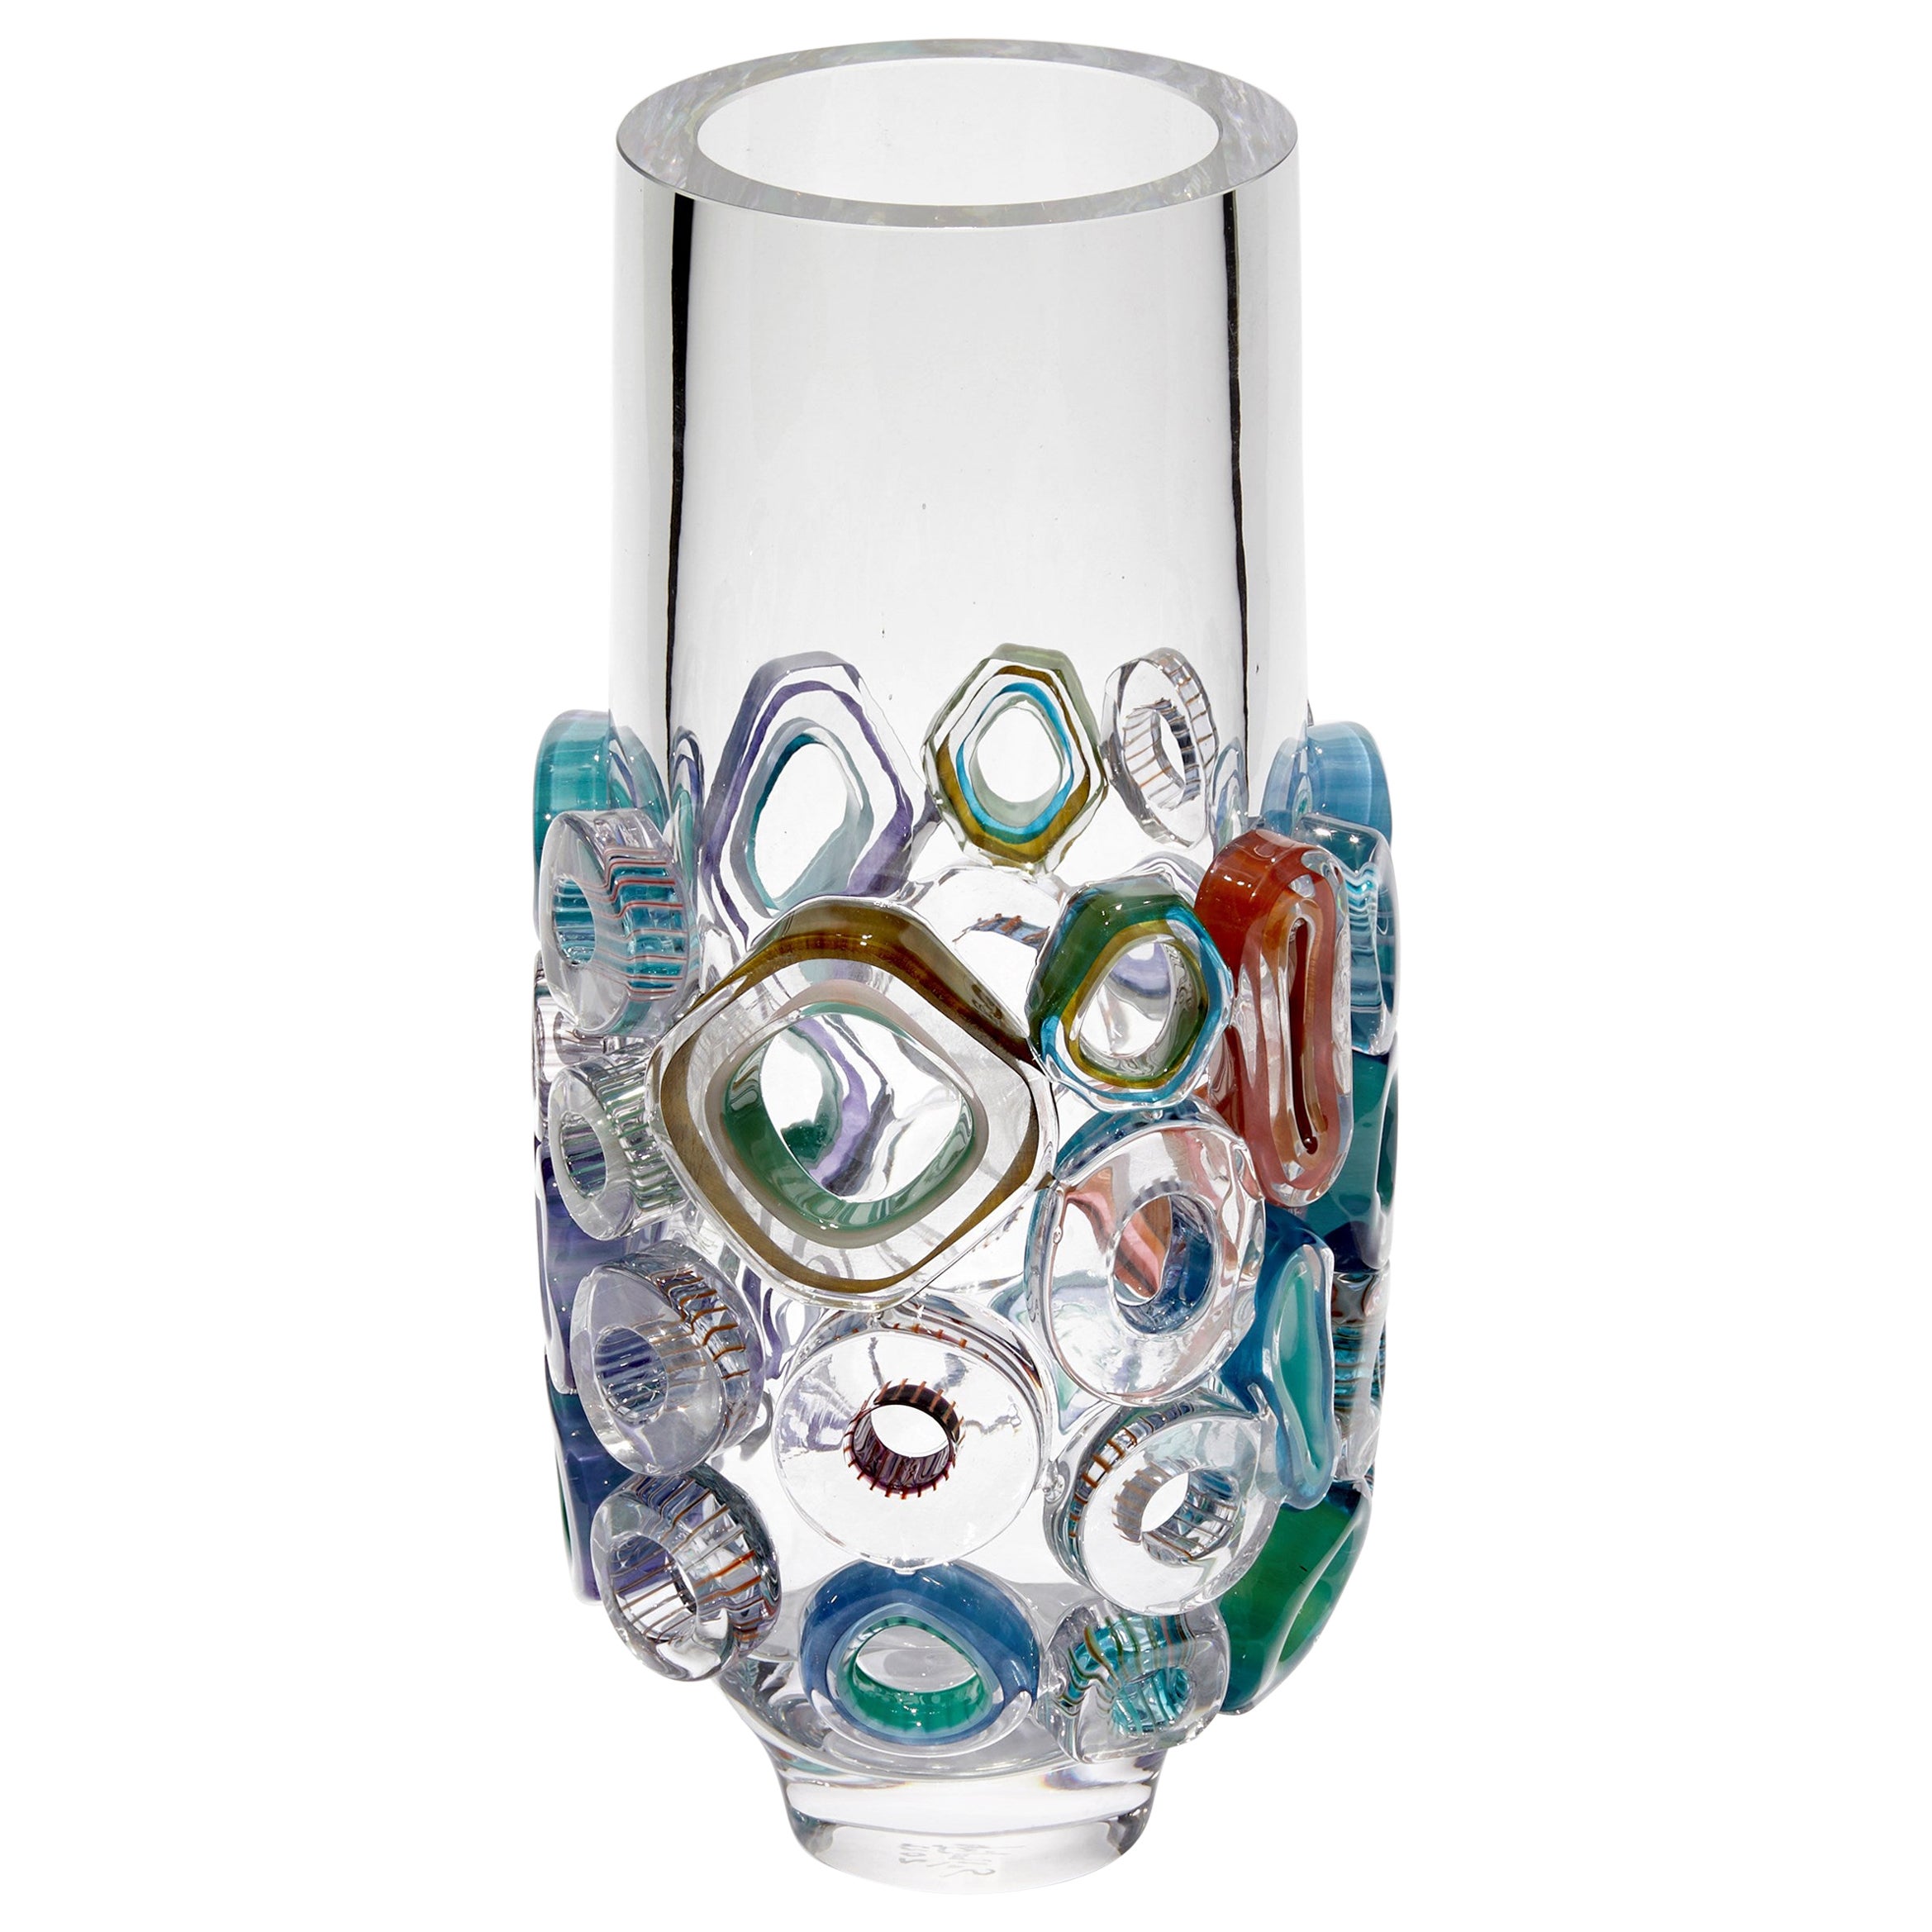 Bright Field Neutral Grey, glass vase with murrini decoration by  Sabine Lintzen